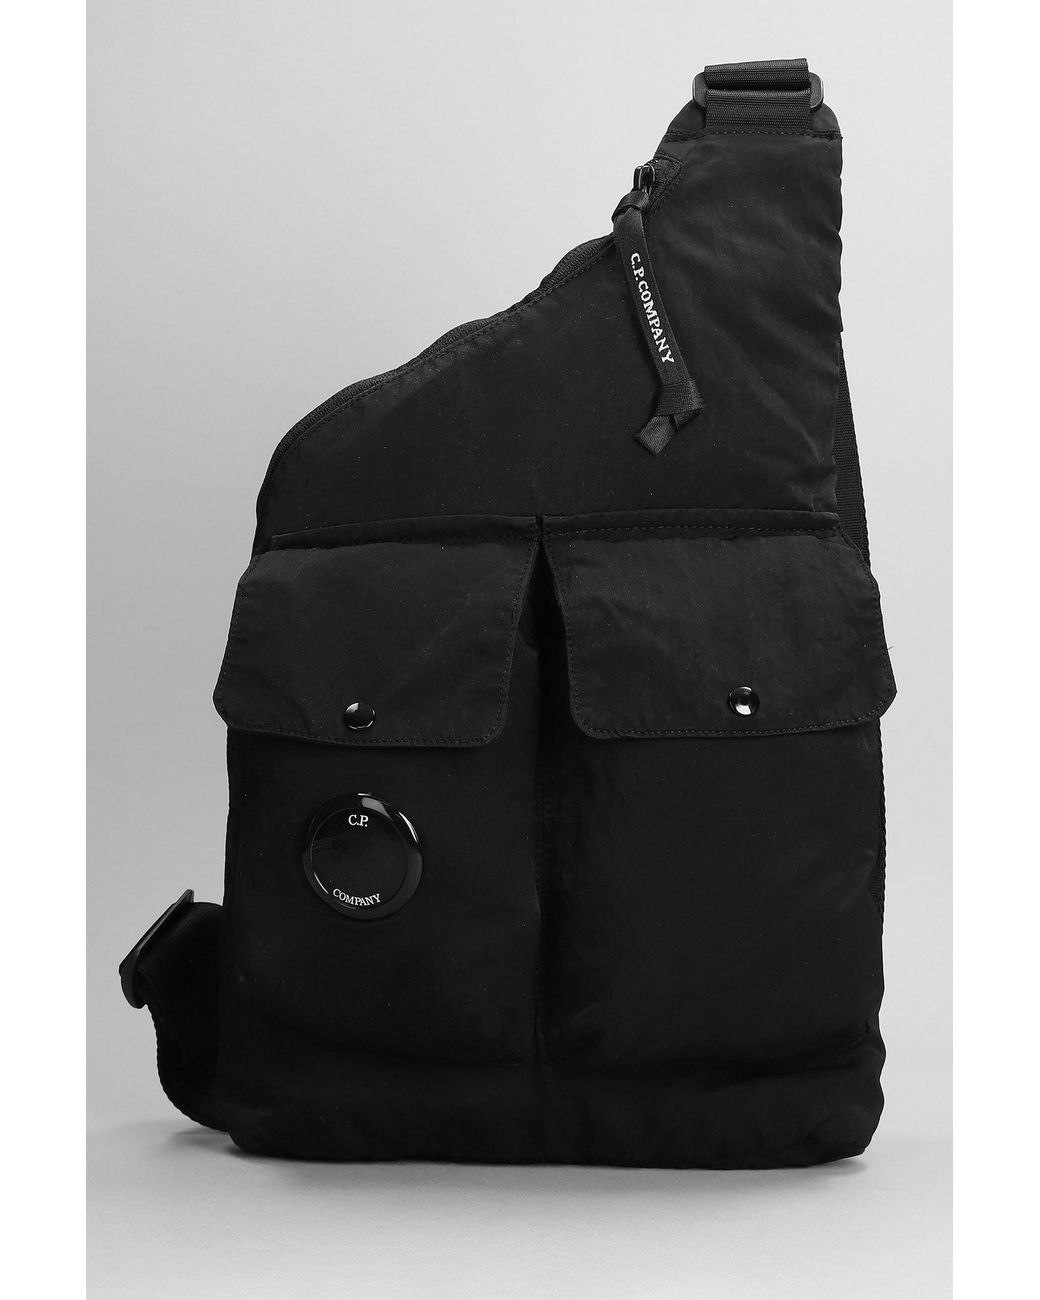 C.P. Company Backpack In Black Nylon for Men | Lyst